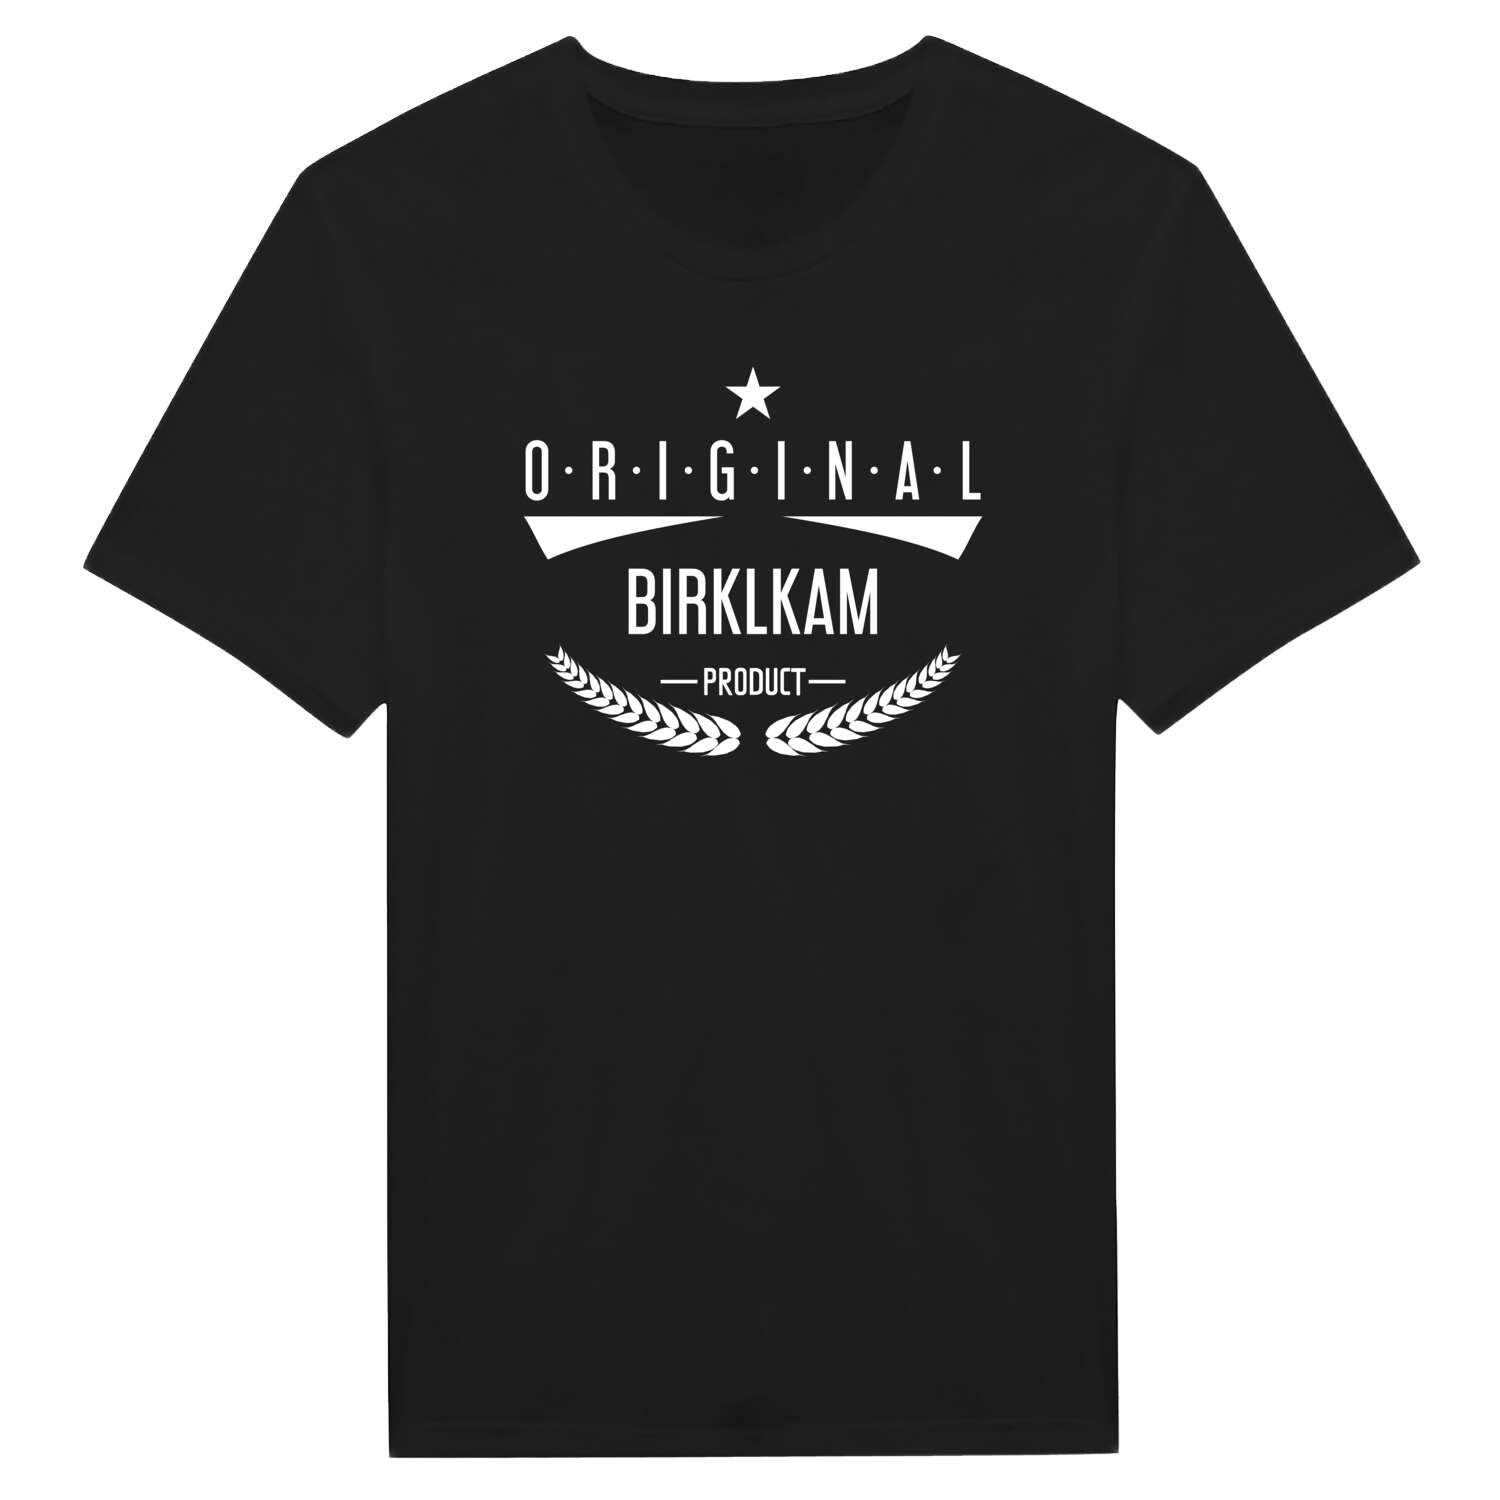 Birklkam T-Shirt »Original Product«